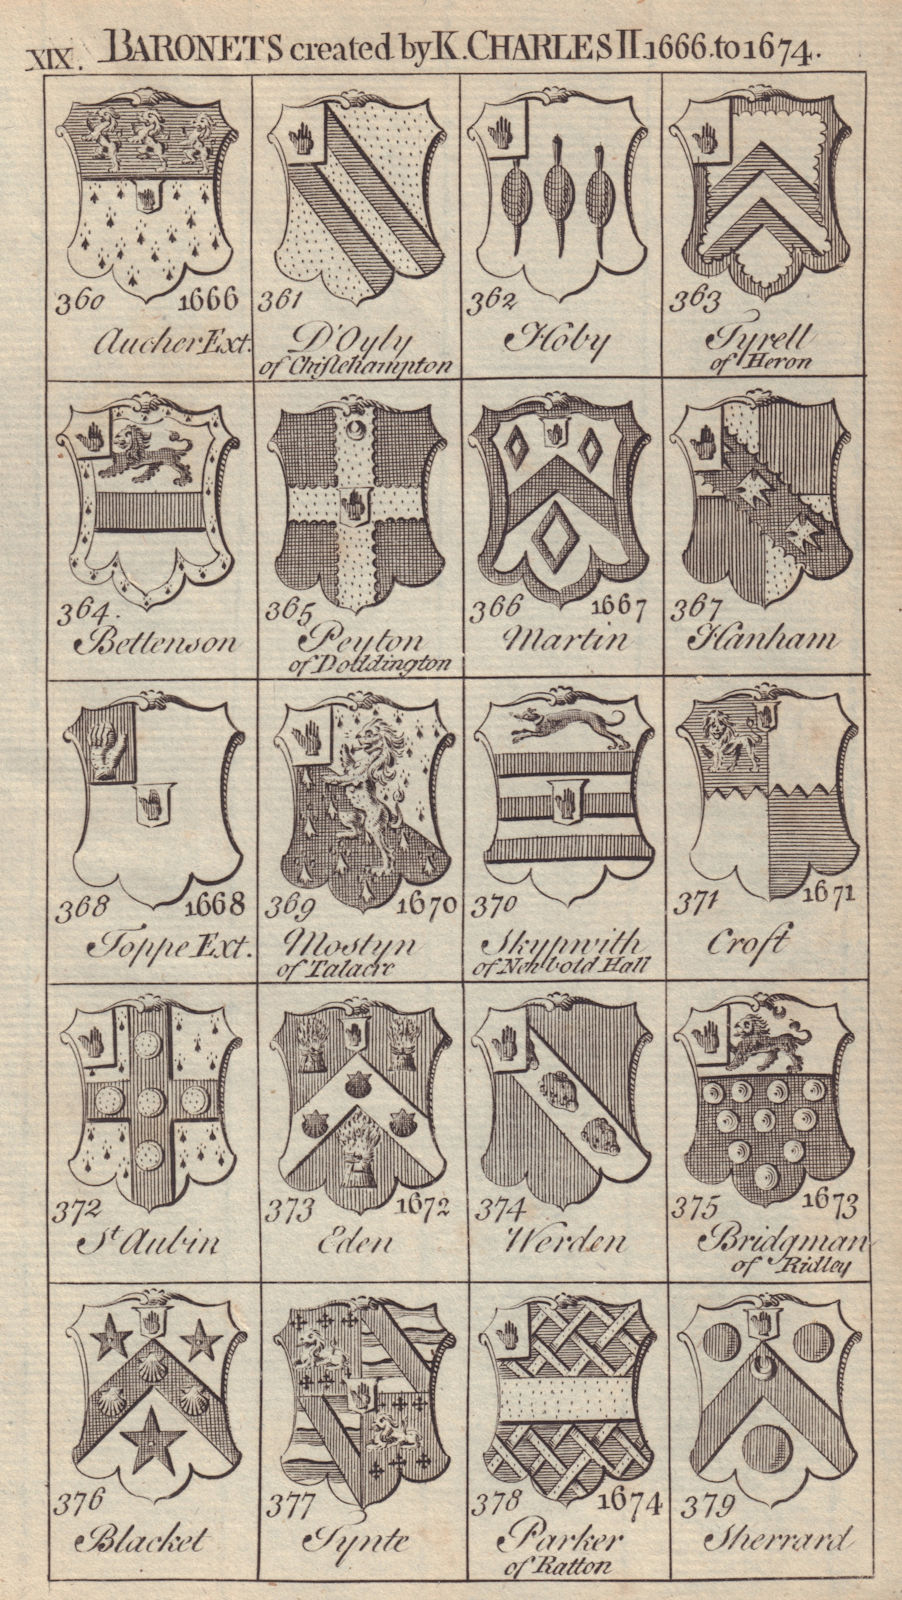 Associate Product Charles II Baronets 1666-74 Aucher Hoby Bettenson Martin Hanham Toppe Croft 1752